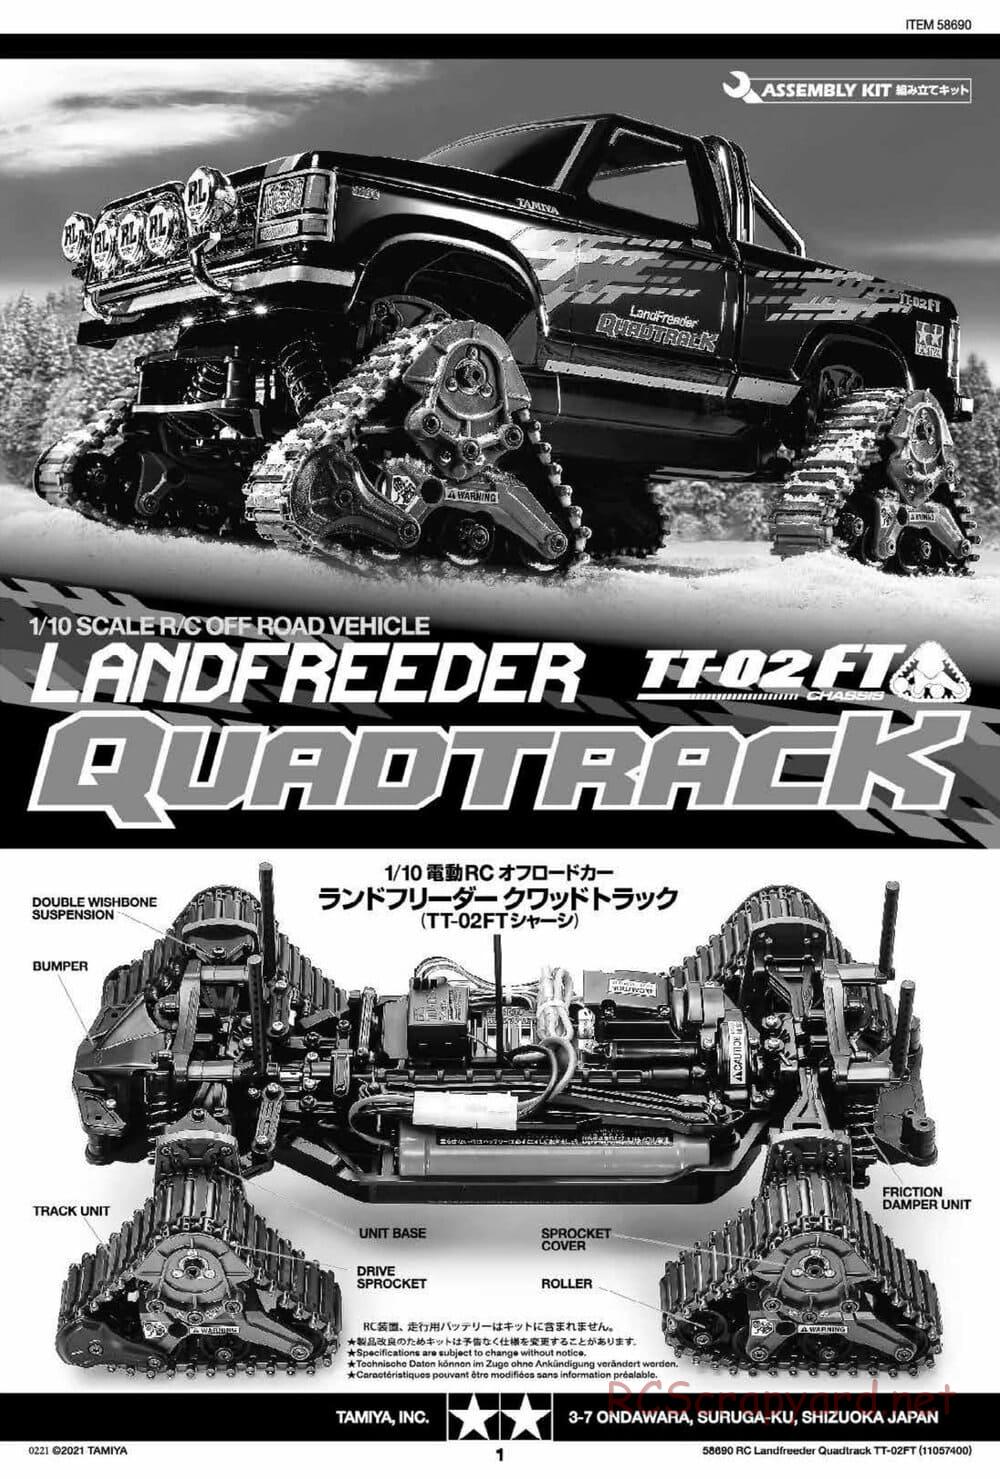 Tamiya - Landfreeder Quadtrack - TT-02FT Chassis - Manual - Page 1